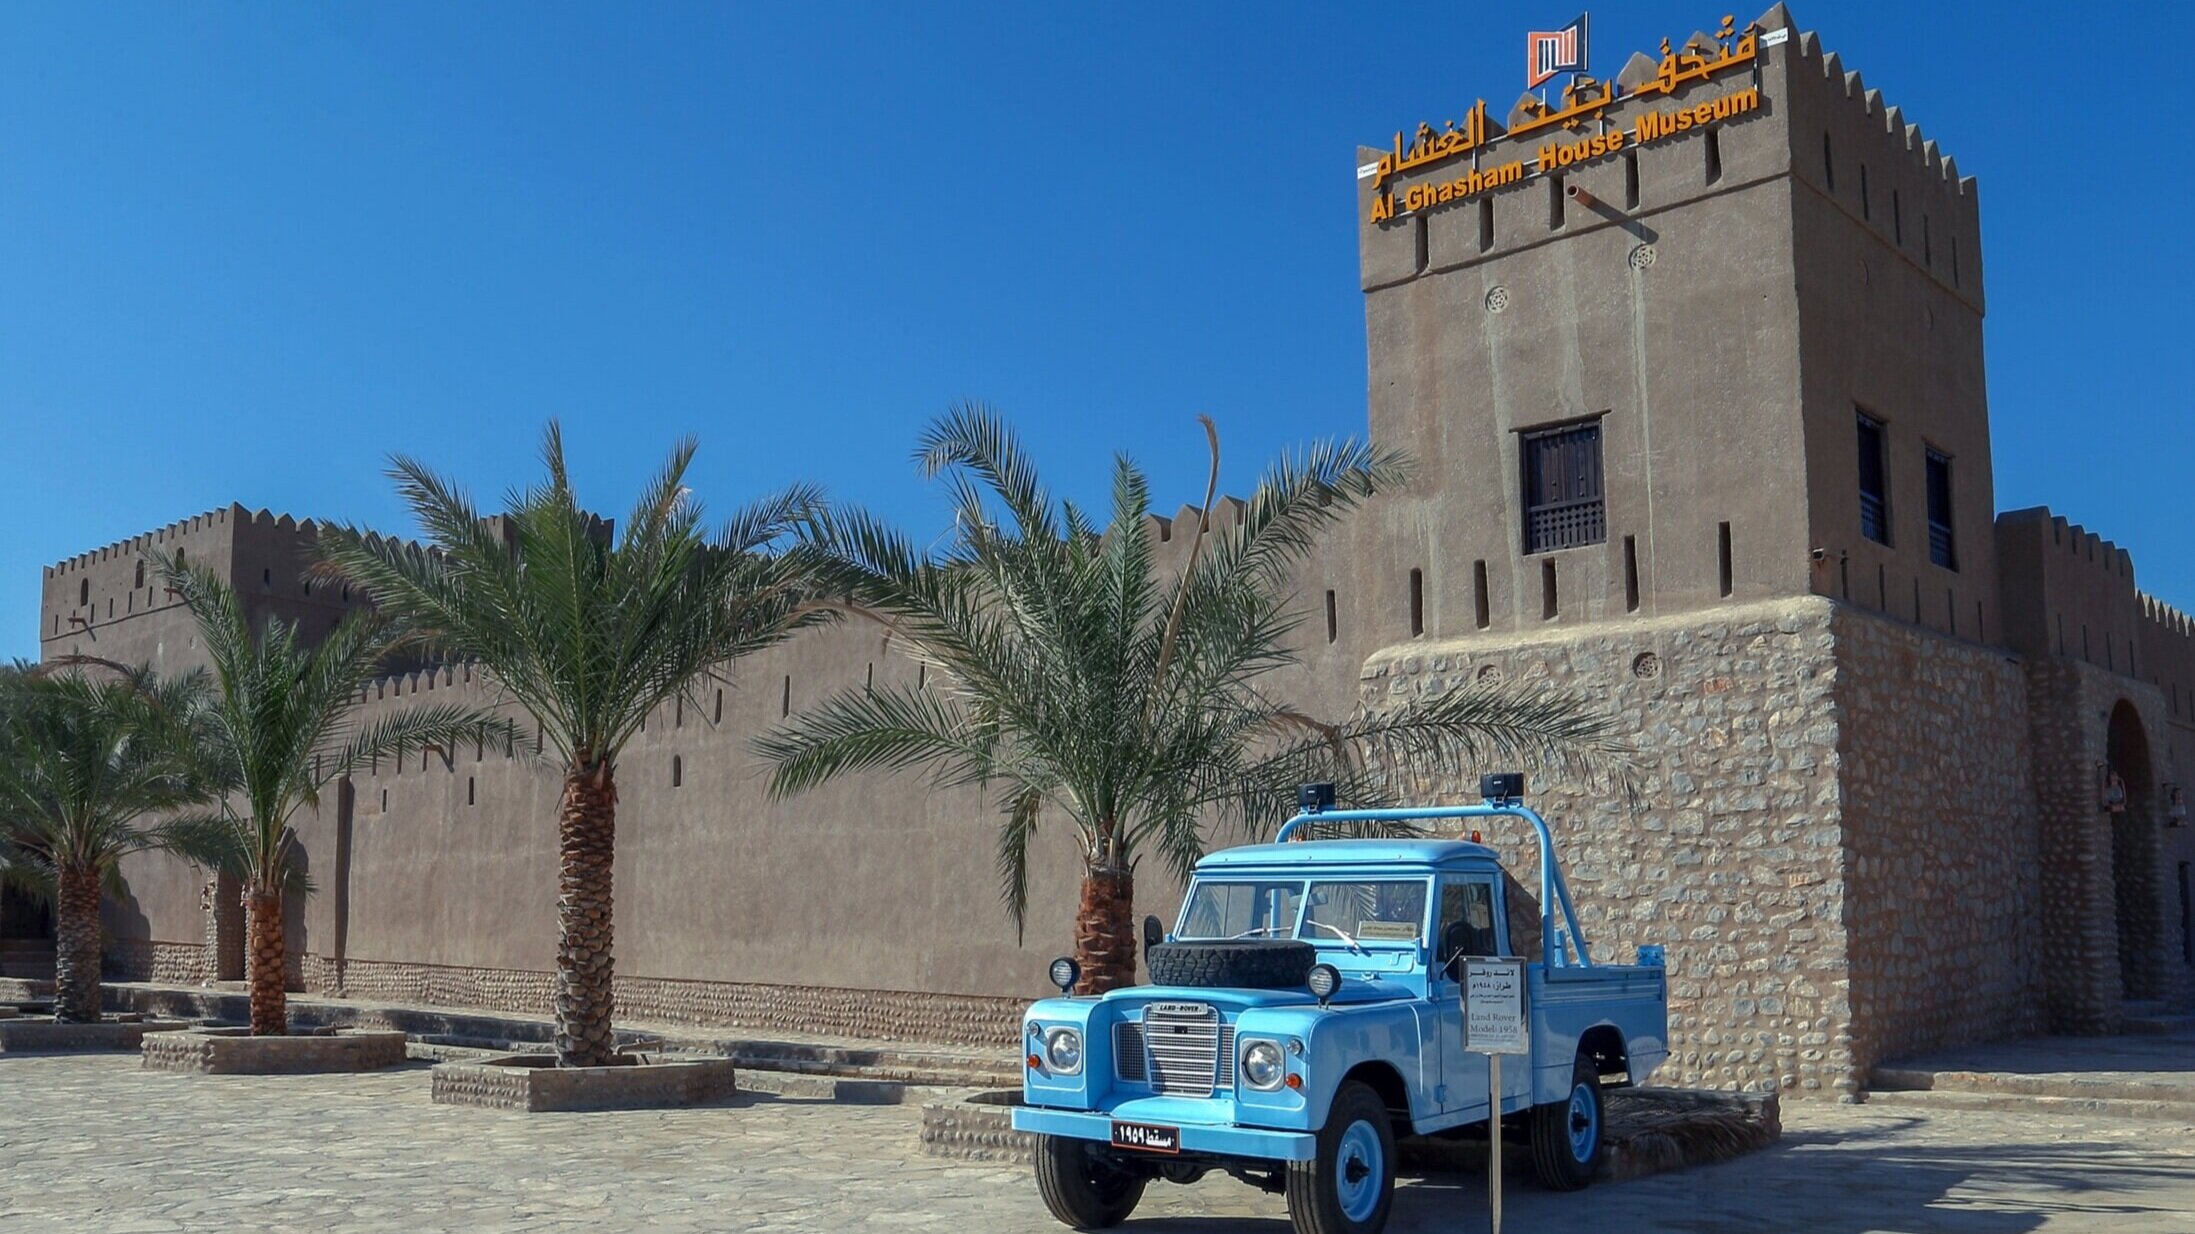 Bait Al Ghasham Haus, Al Maamari Tours